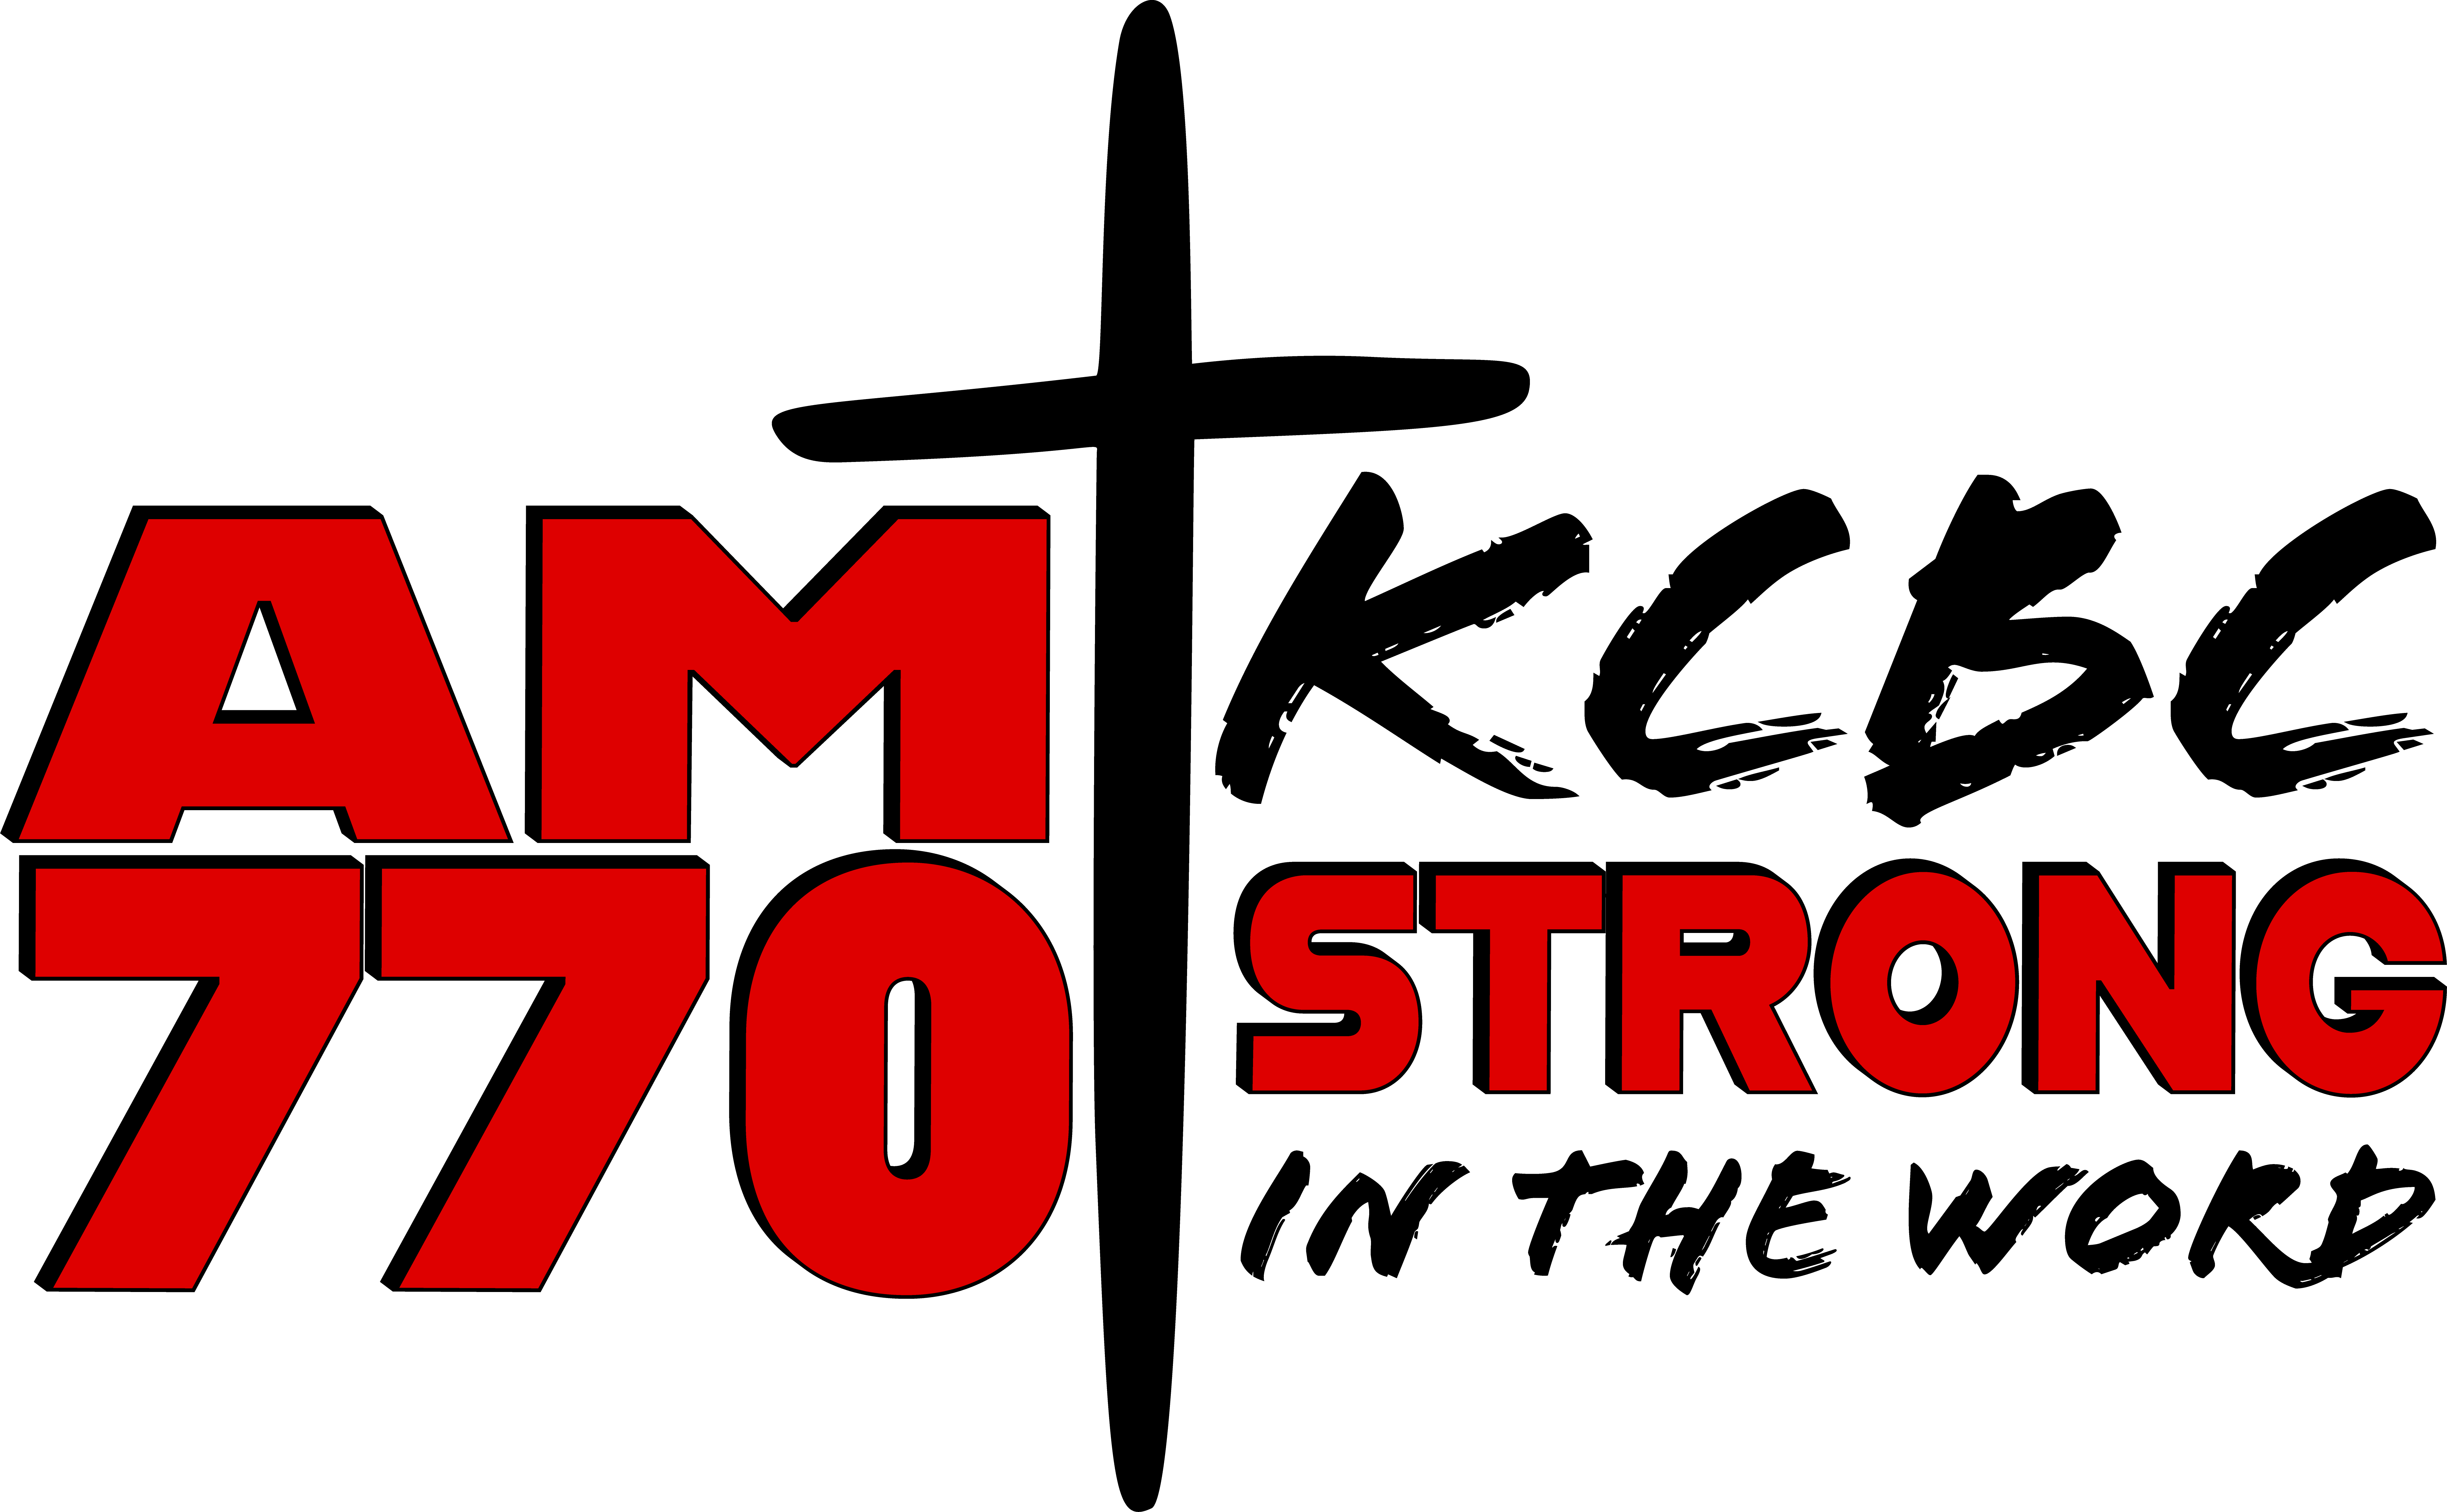 kcbc-logo-500dpi